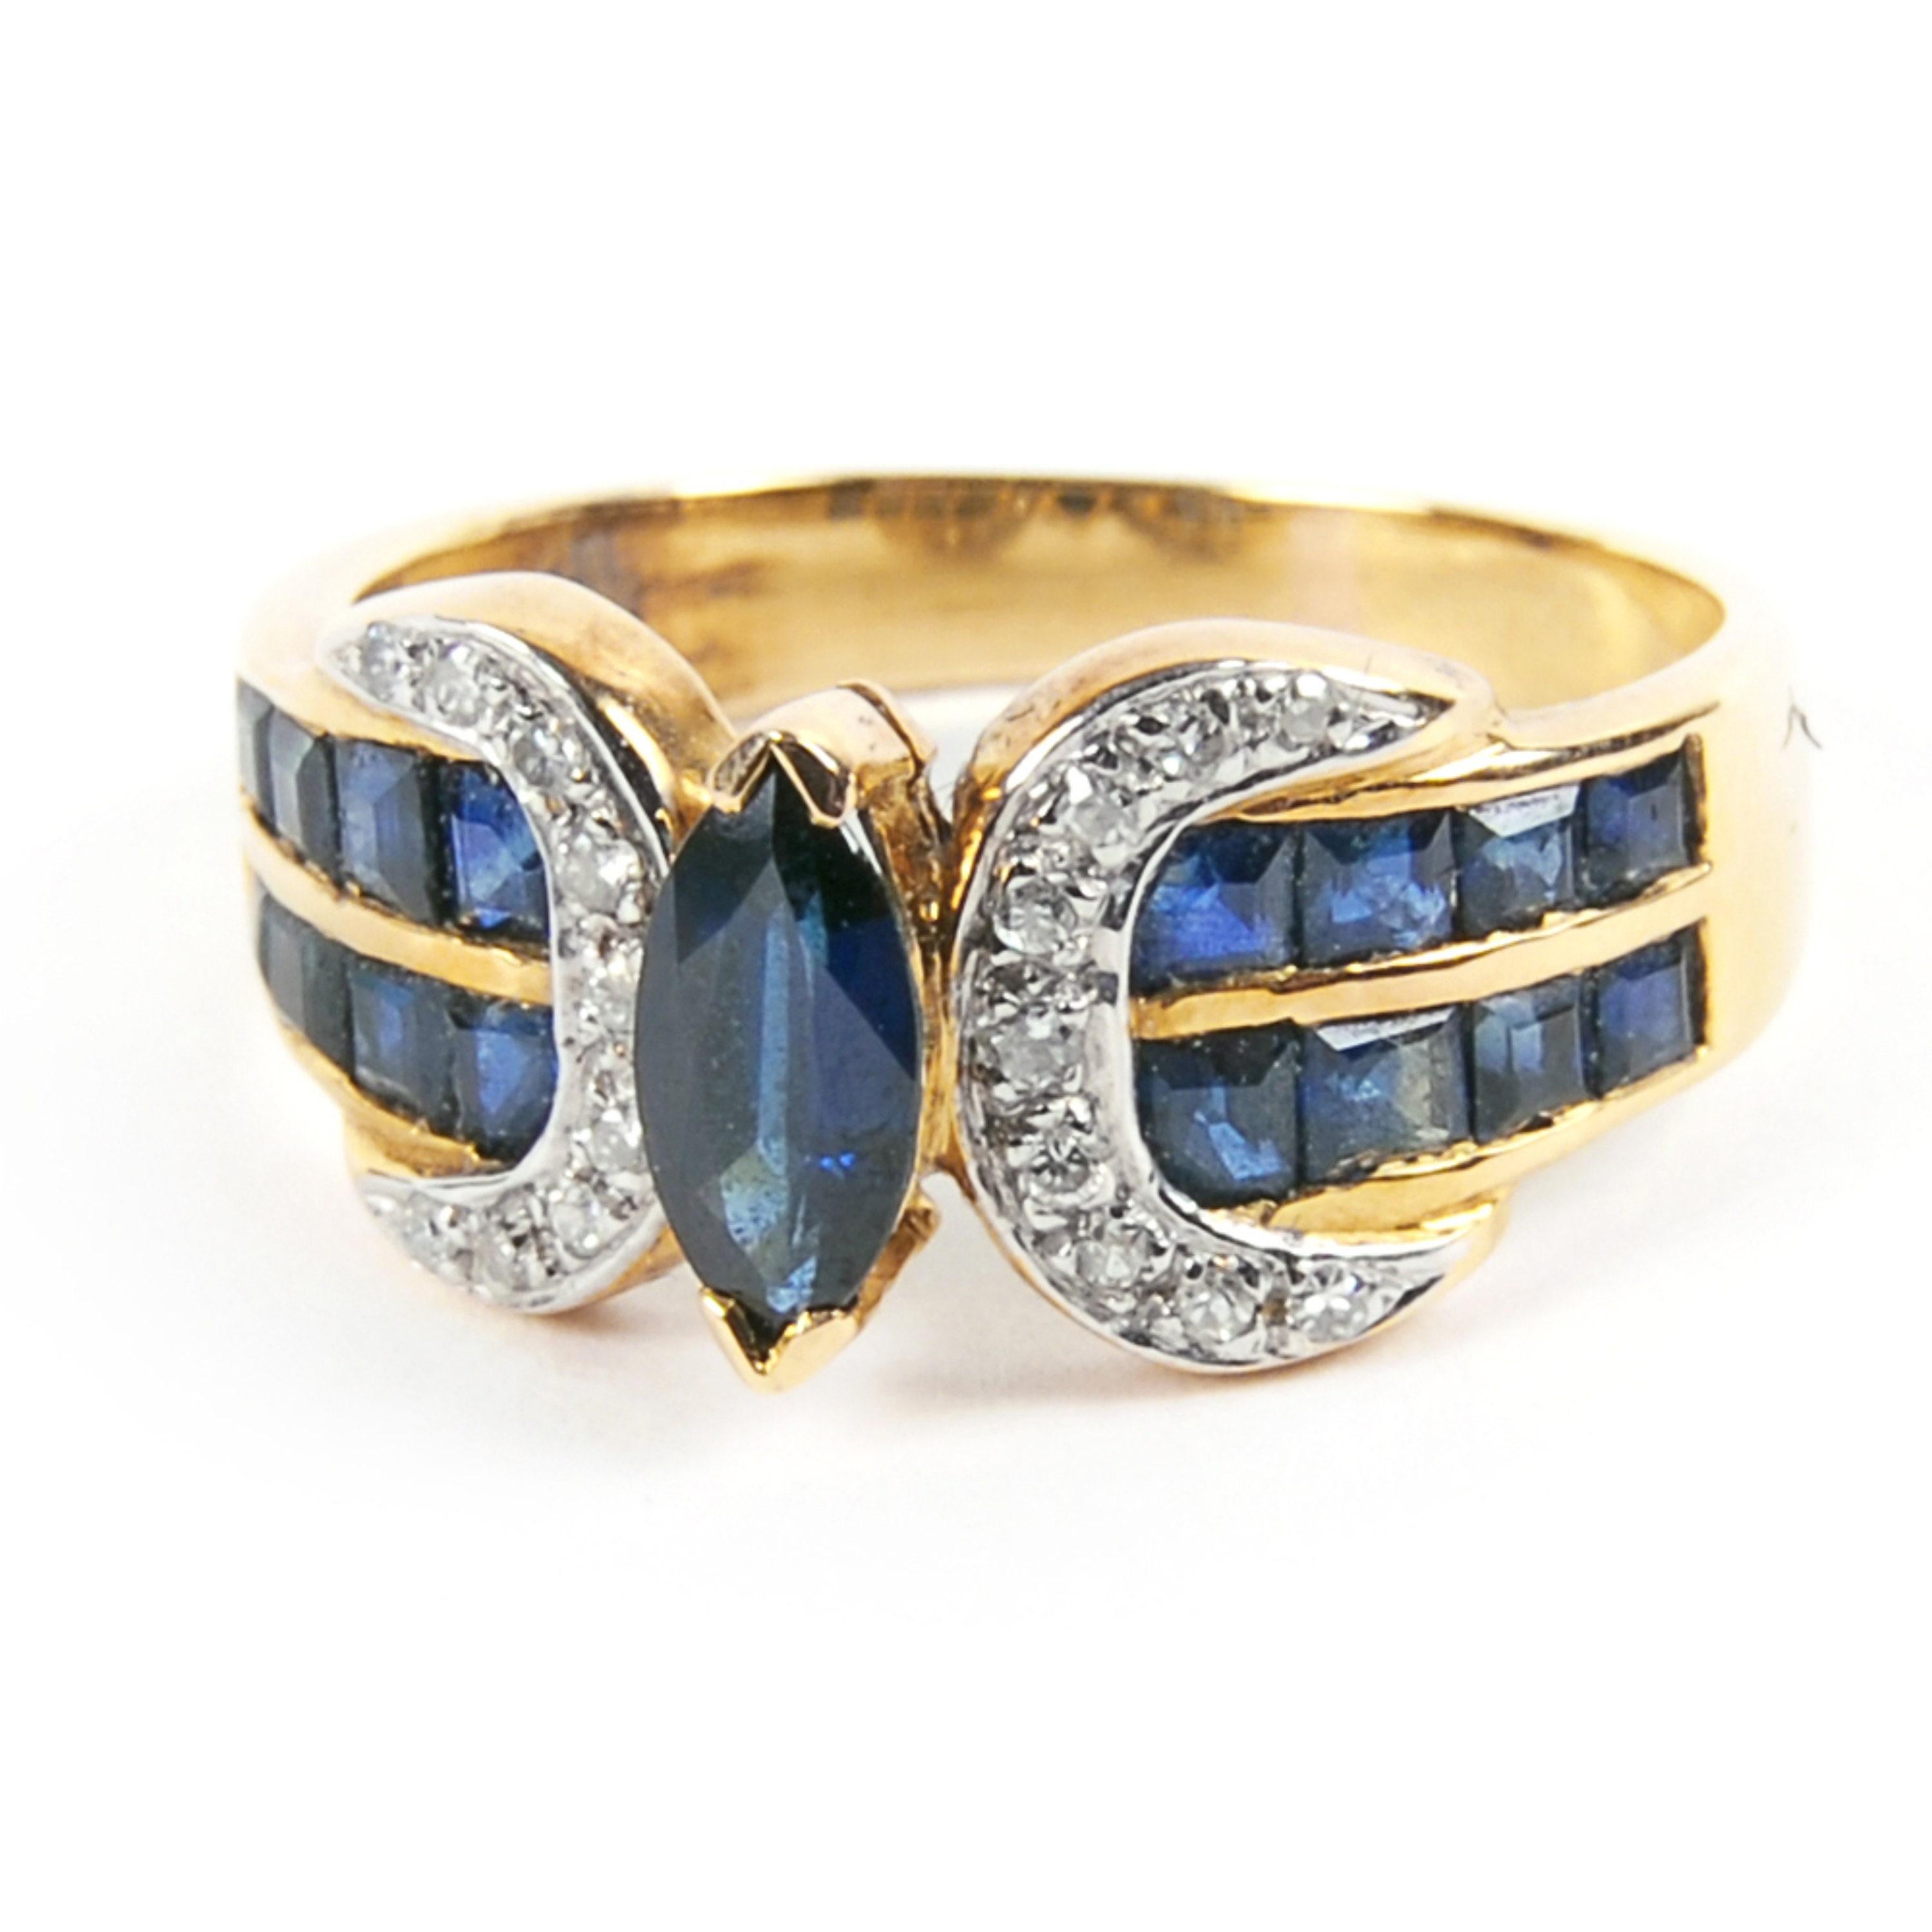 For Sale:  2 Carat Ceylon Sapphire Diamond Cocktail Ring Marquise Cut Sapphire Fashion Ring 2